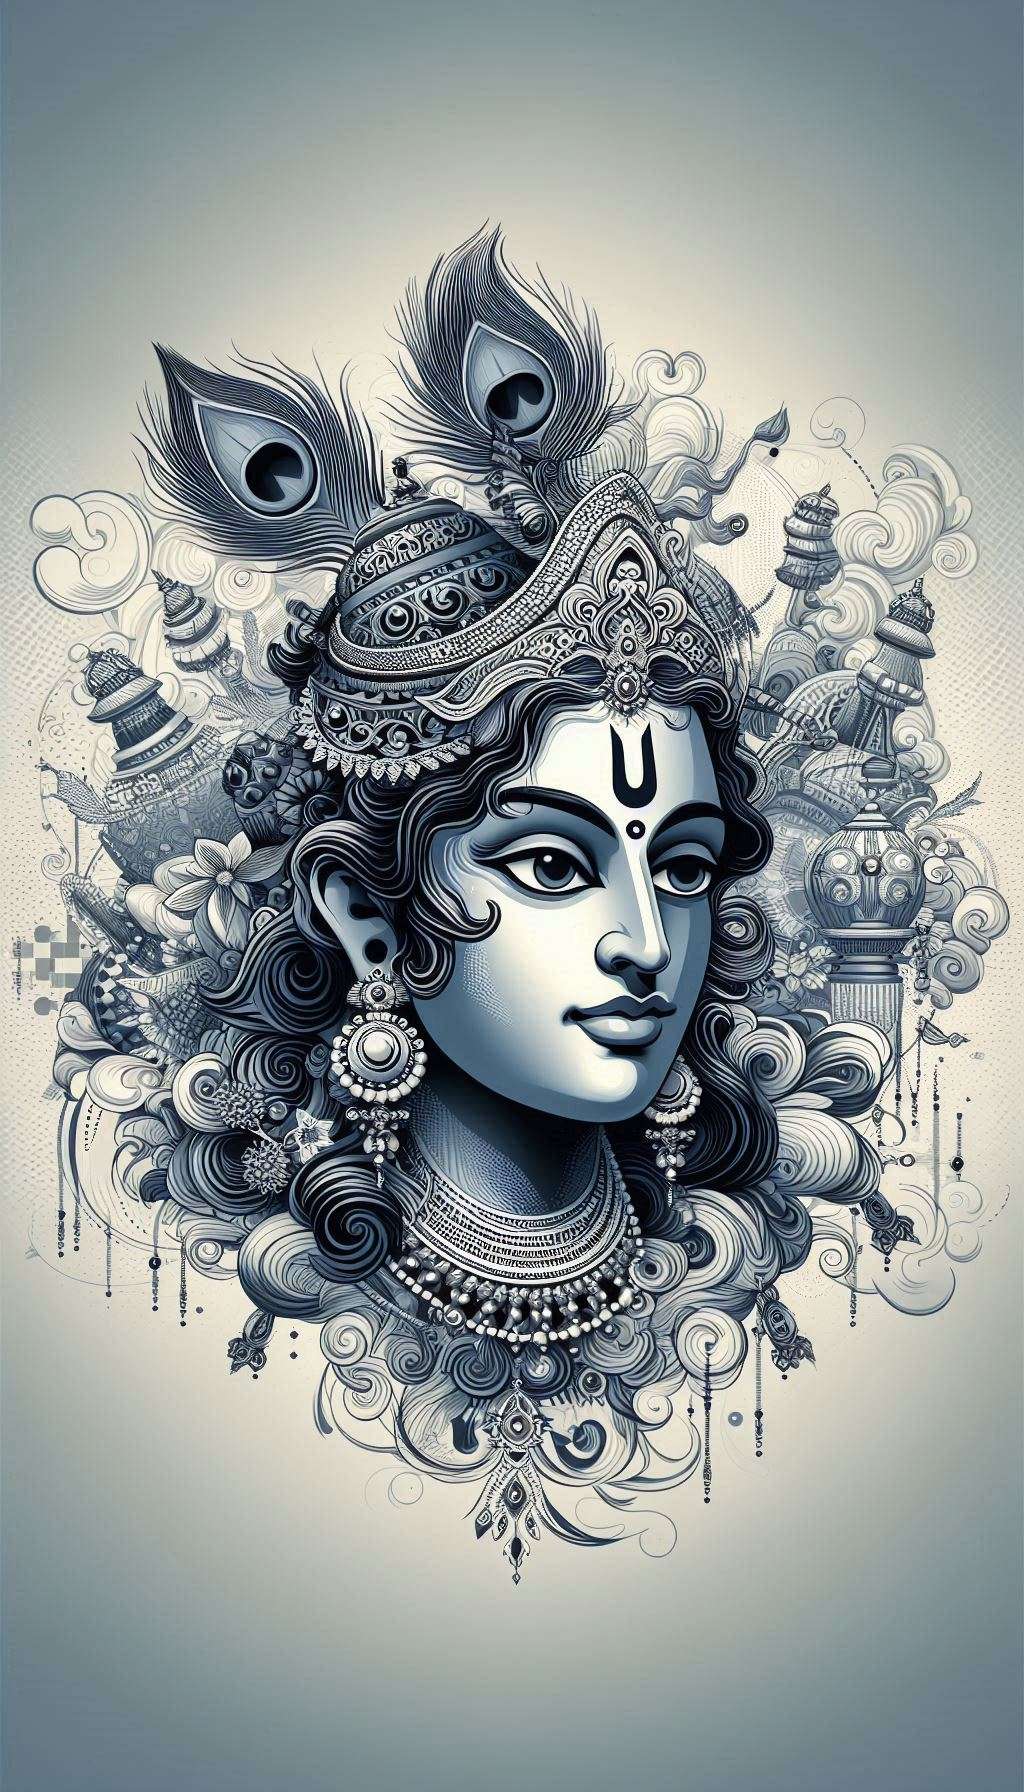 modern digital illustration of lord krishna